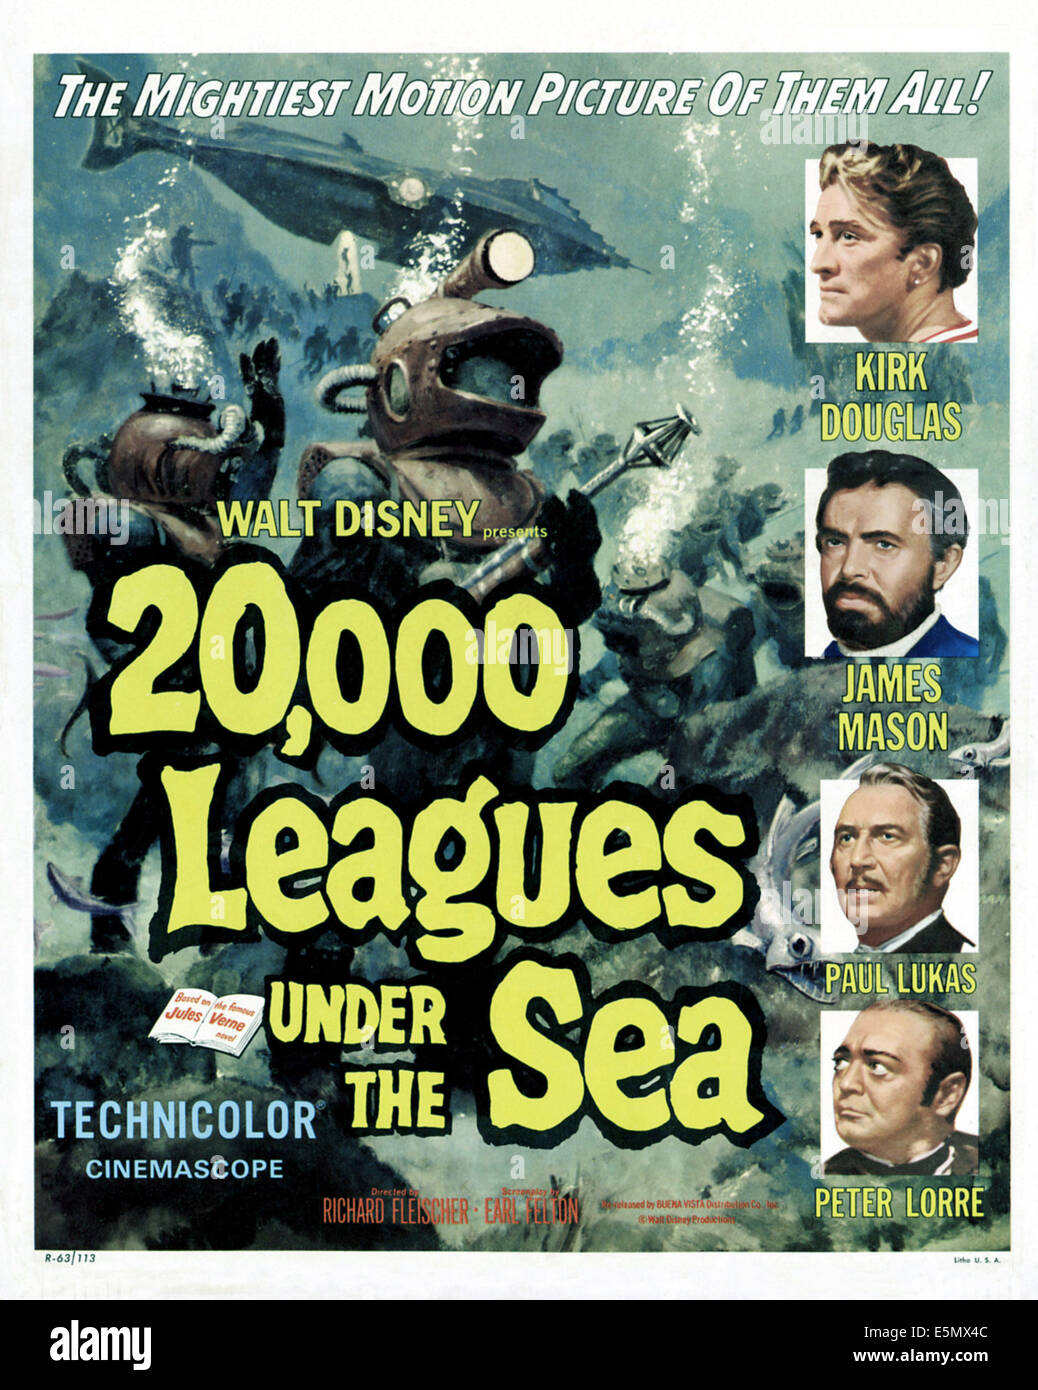 20.000 LEAGUES UNDER THE SEA (von oben): Kirk Douglas James Mason, Paul Lukas, Peter Lorre, 1954. Stockfoto